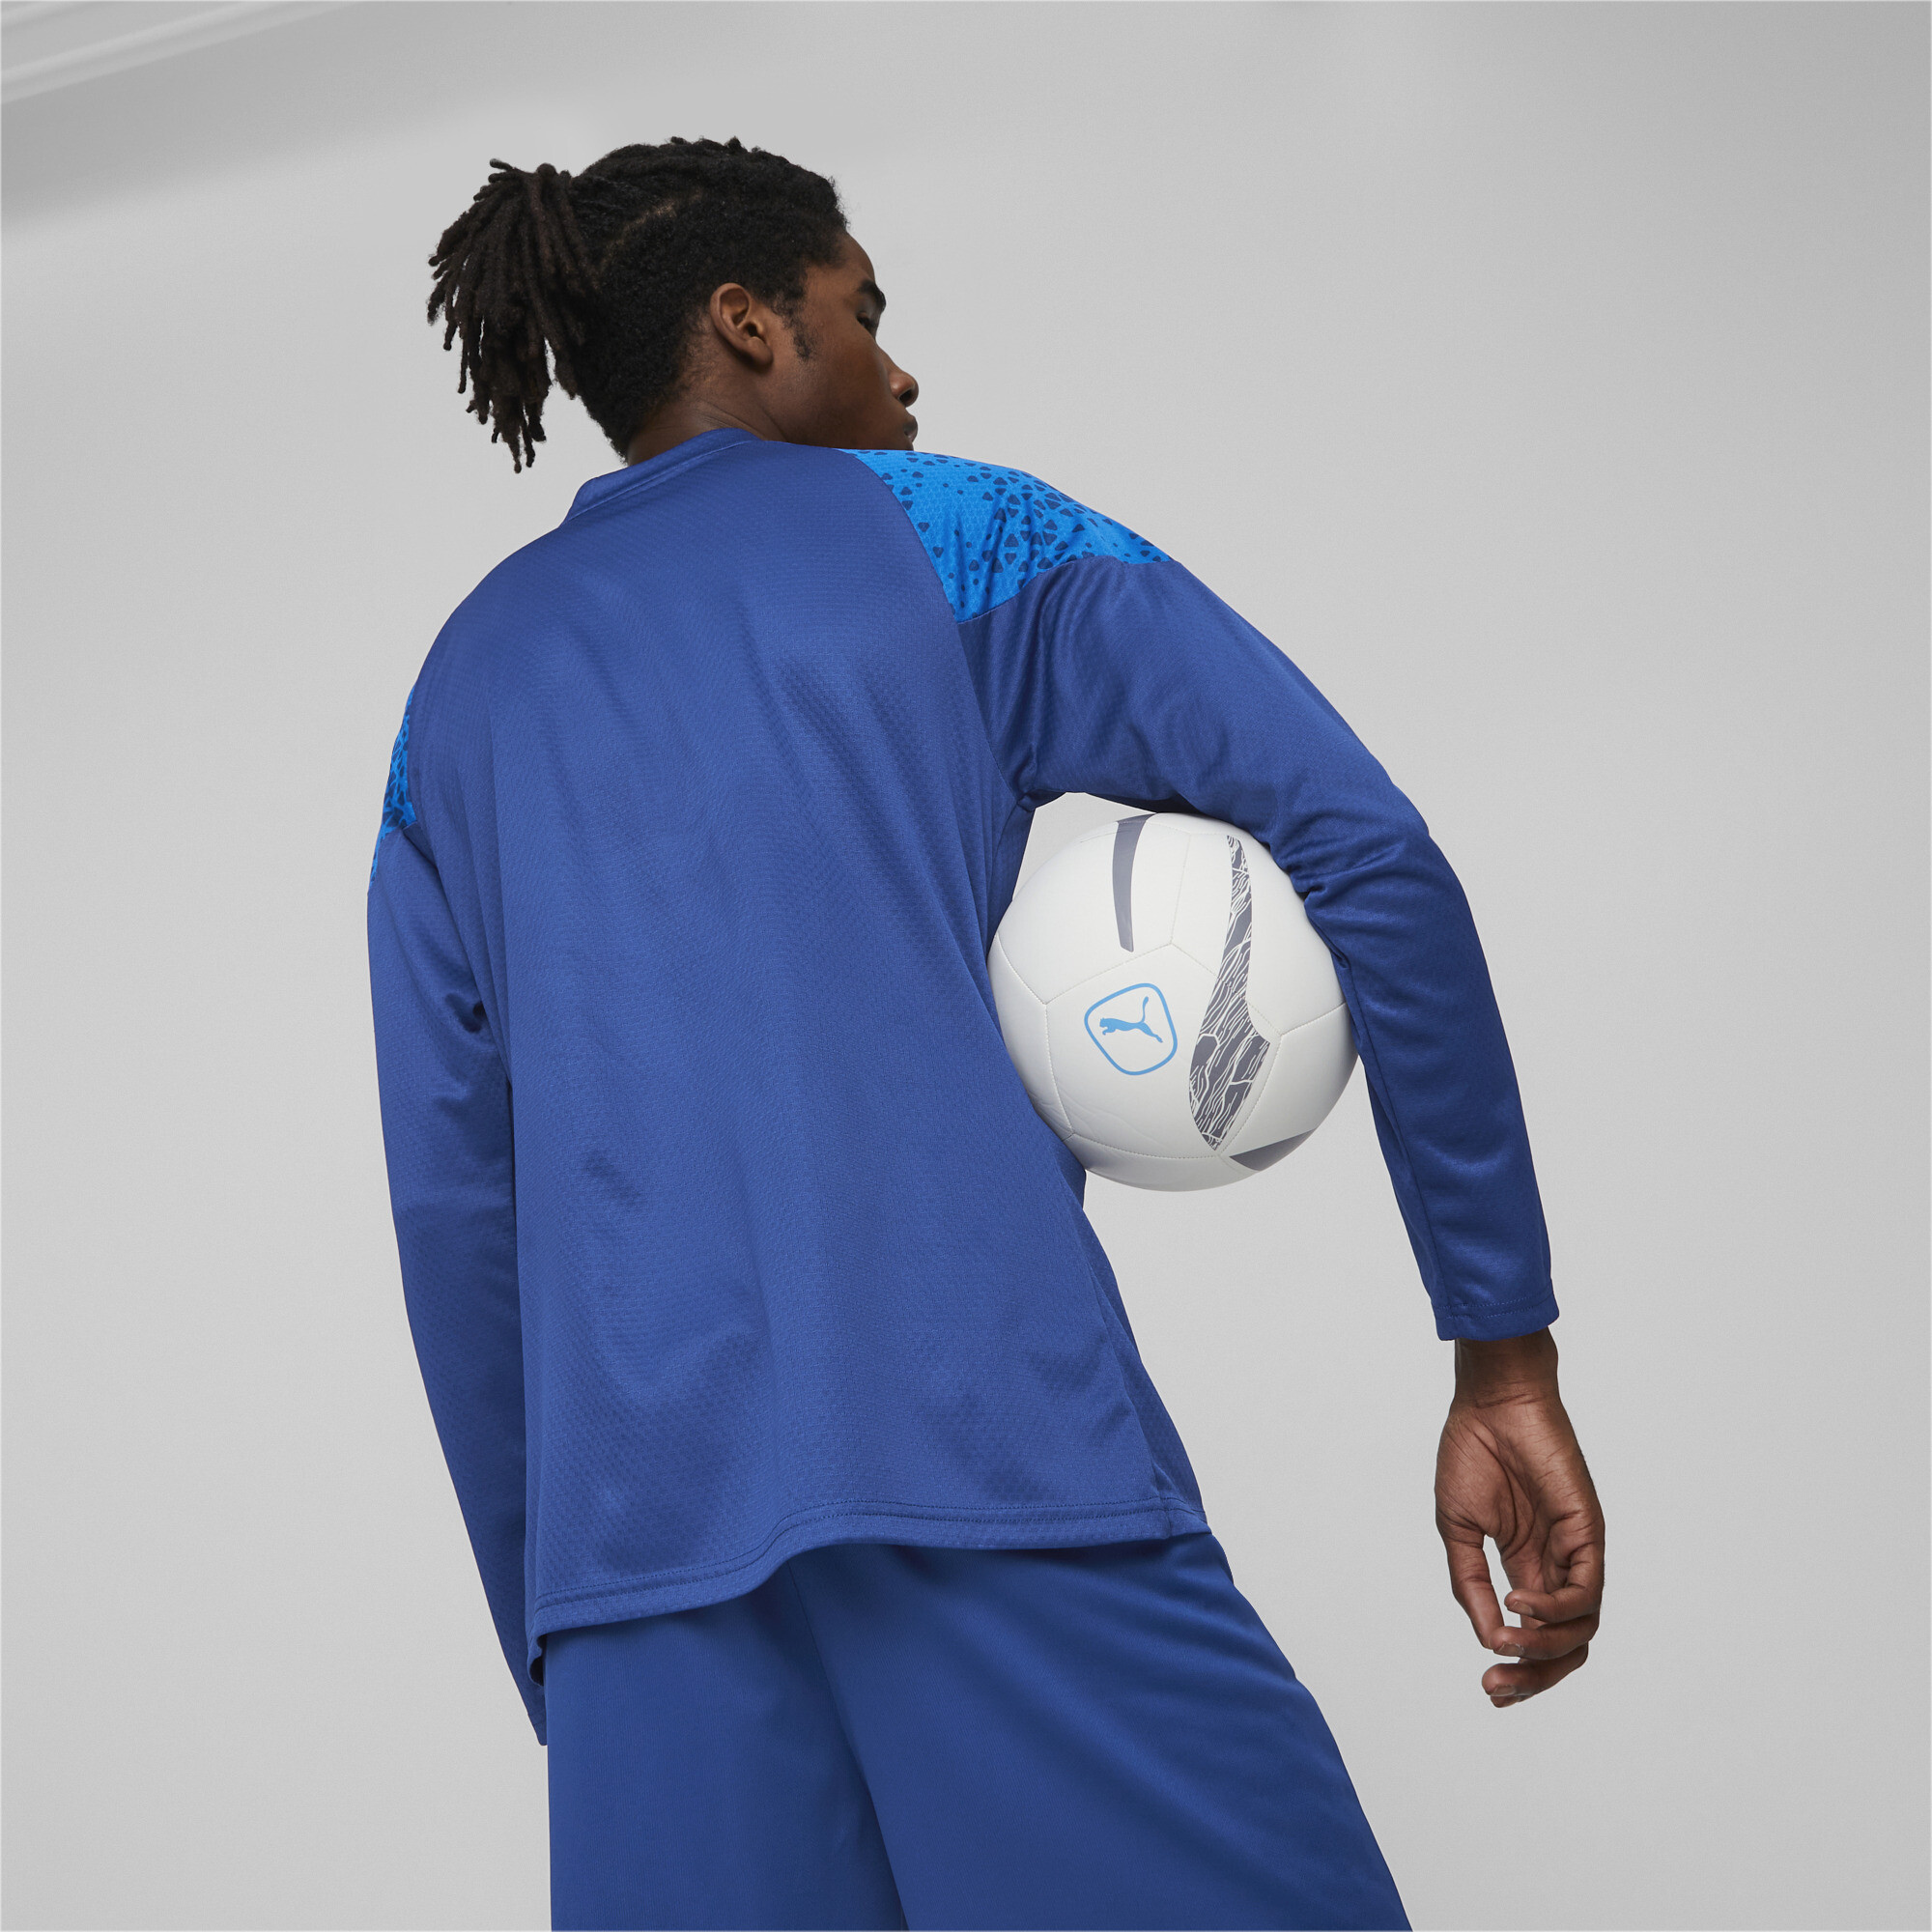 Men's Puma Olympique De Marseille Football Training Quarter-Zip Top, Blue Top, Size XL Top, Clothing